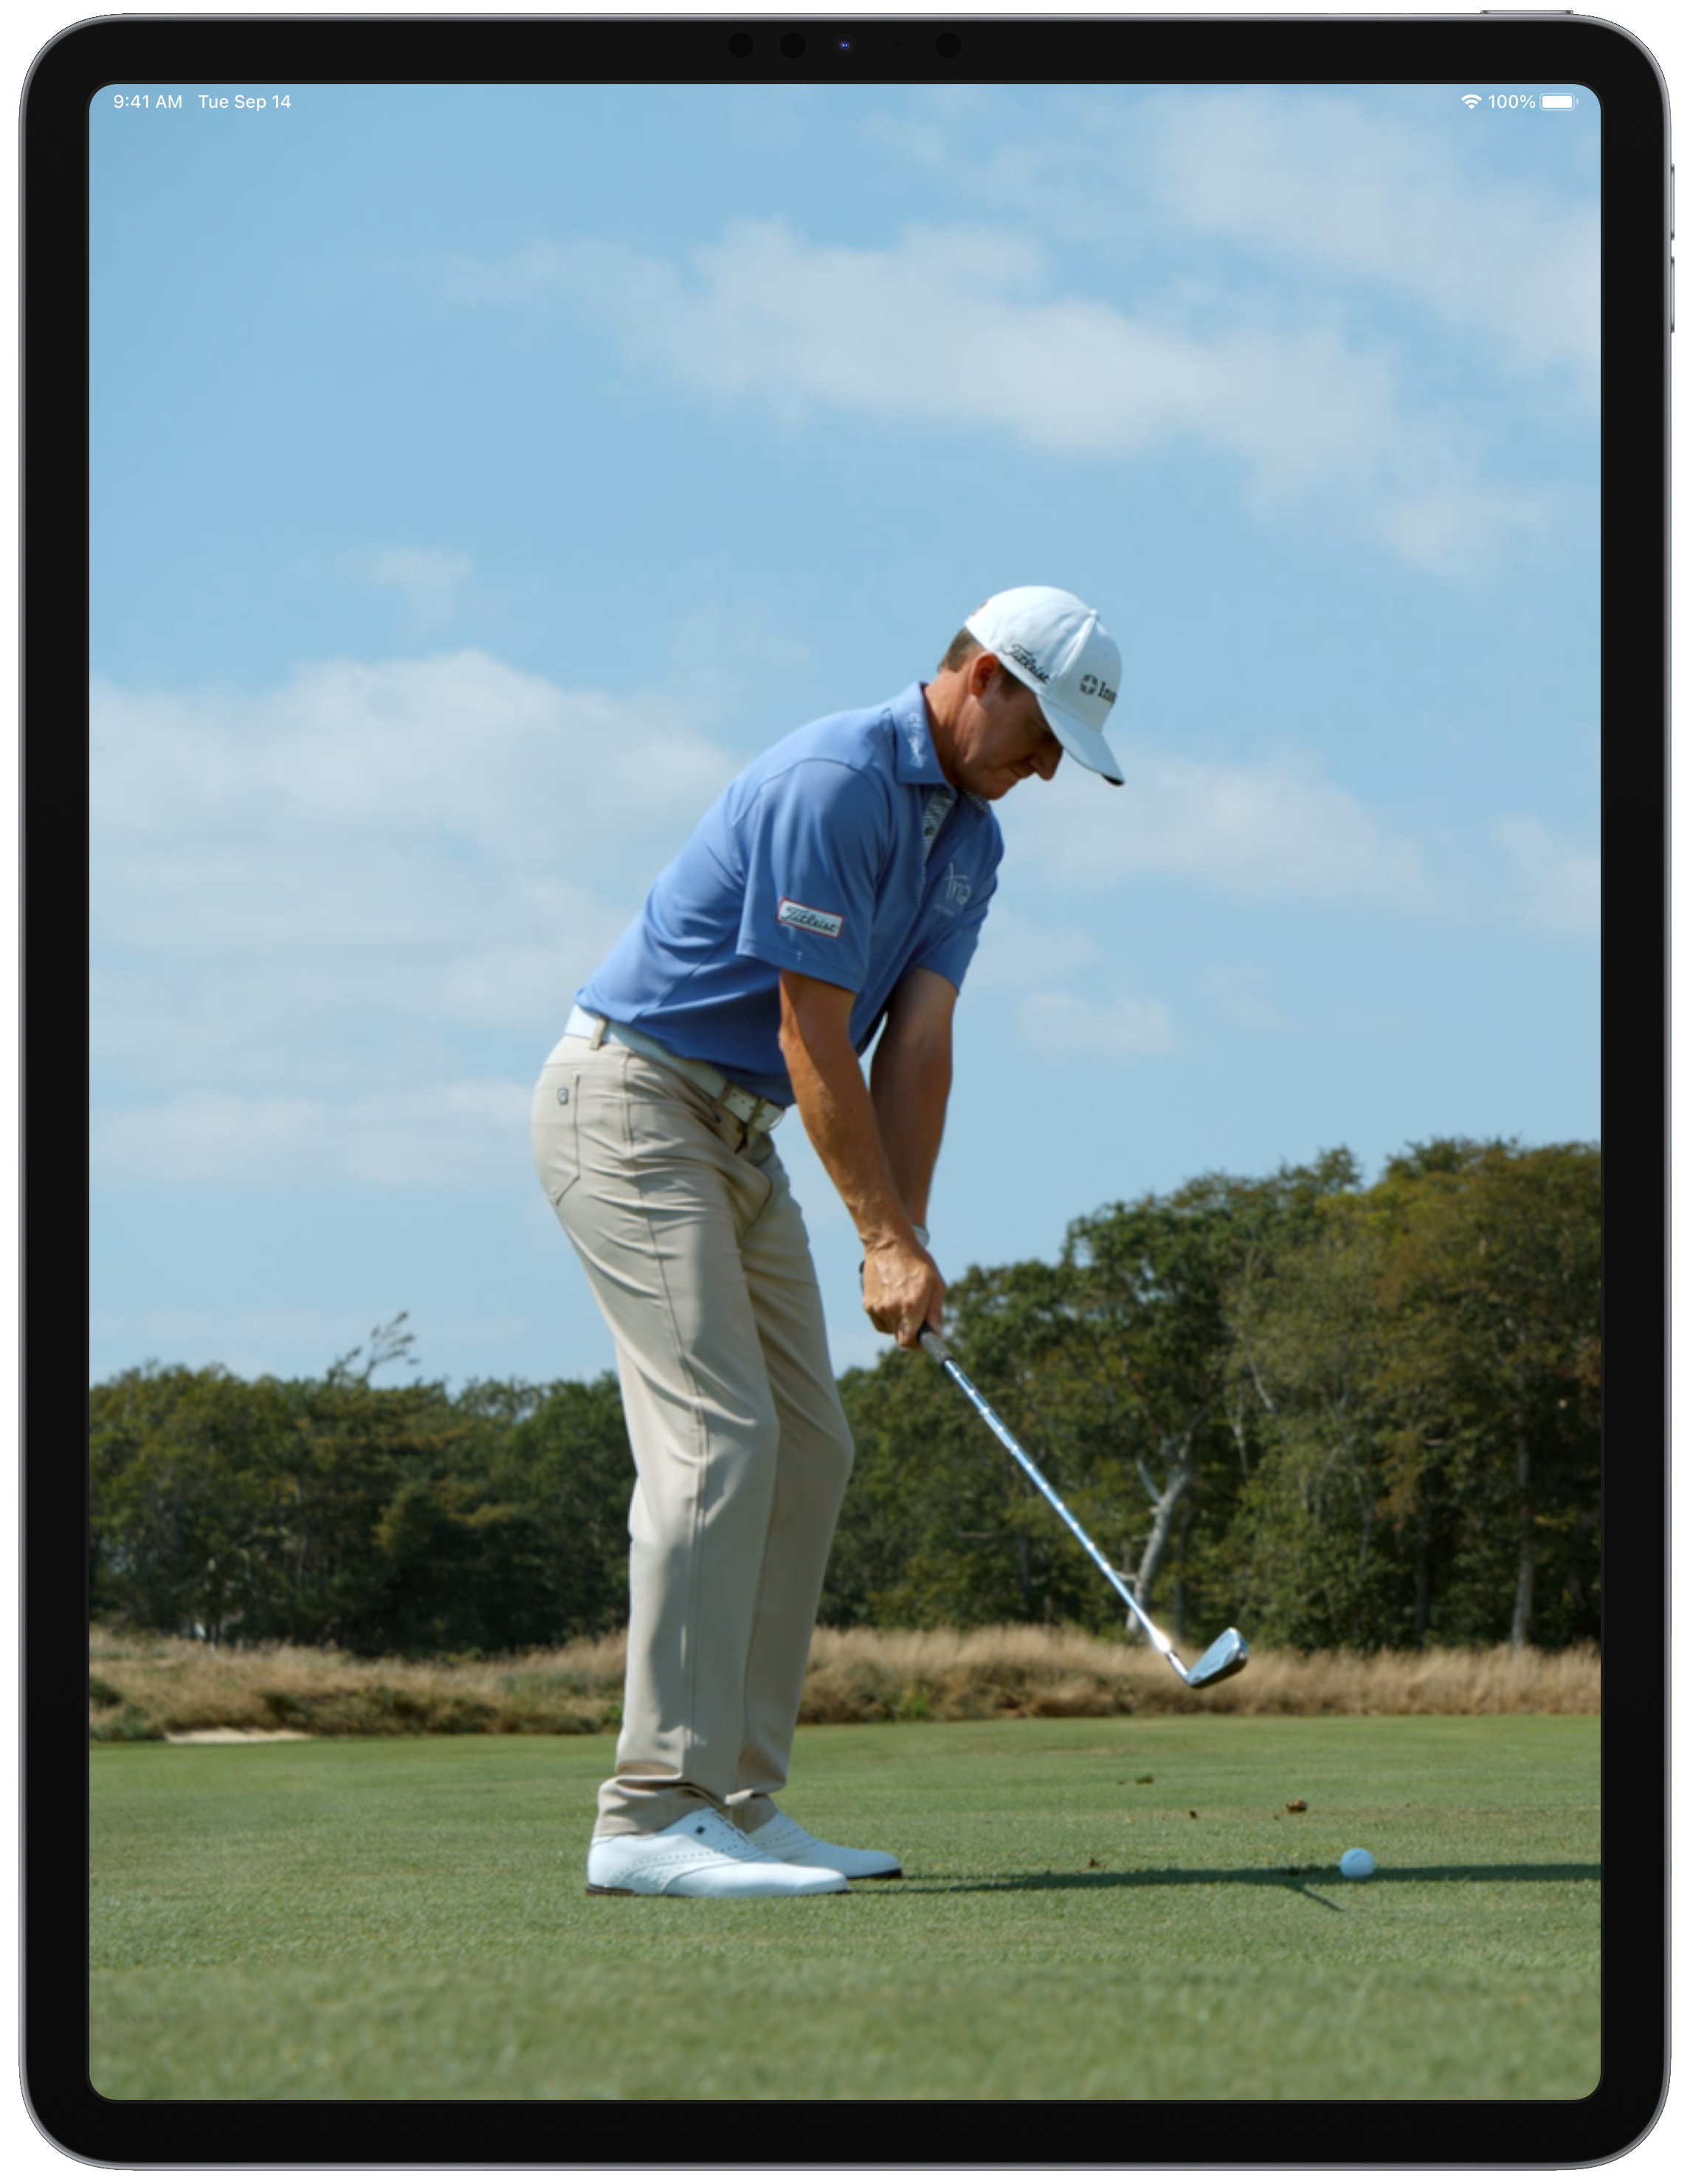 iPad instant replay of golf swing